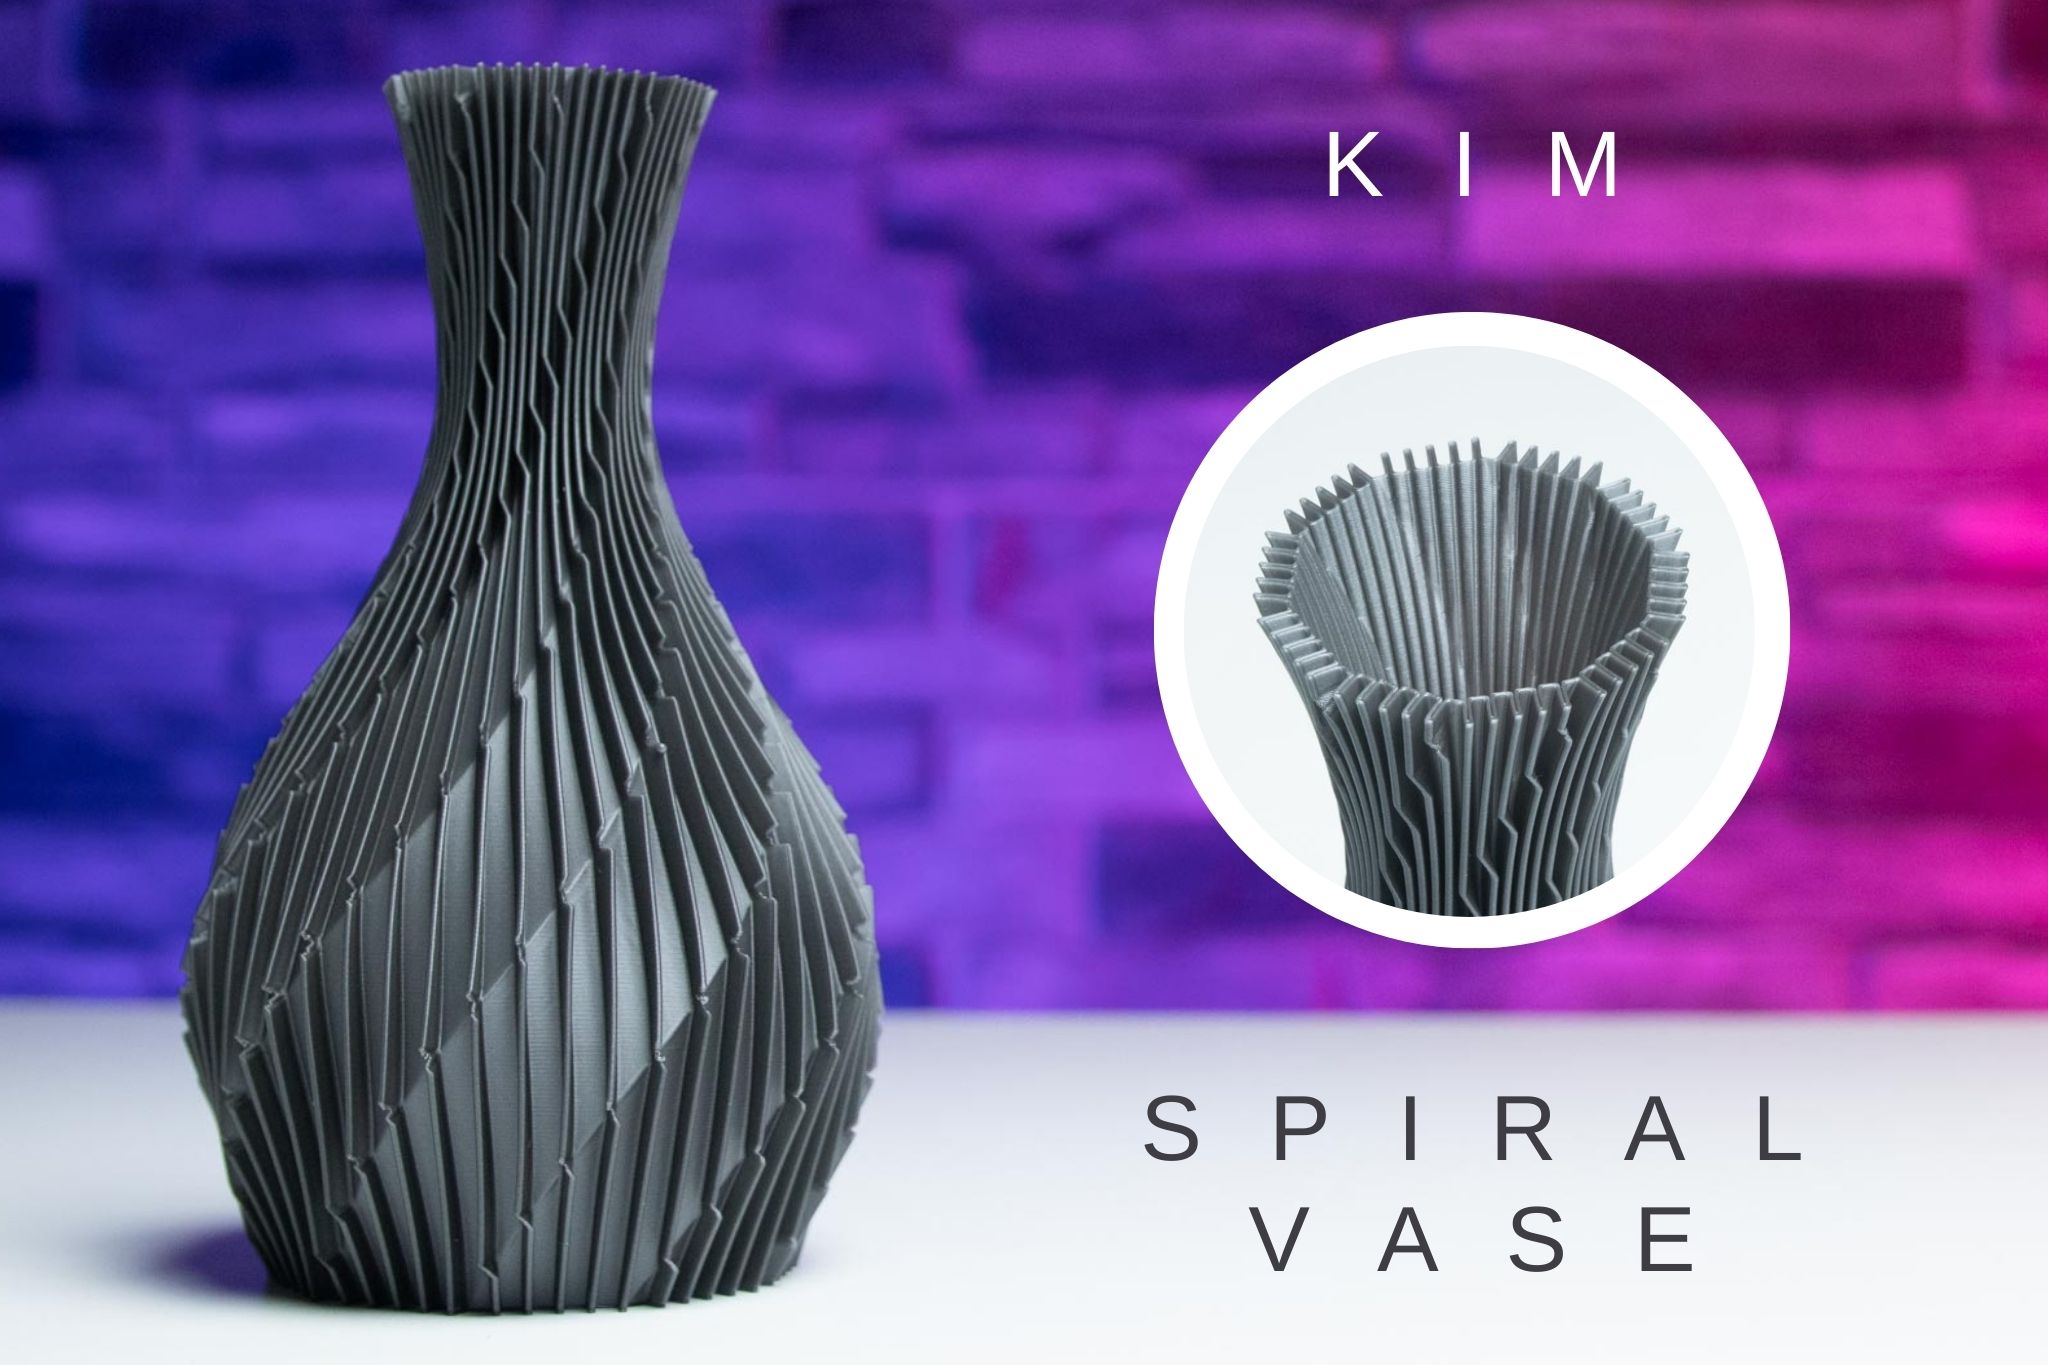 3D Printed Spiral Vase KIM